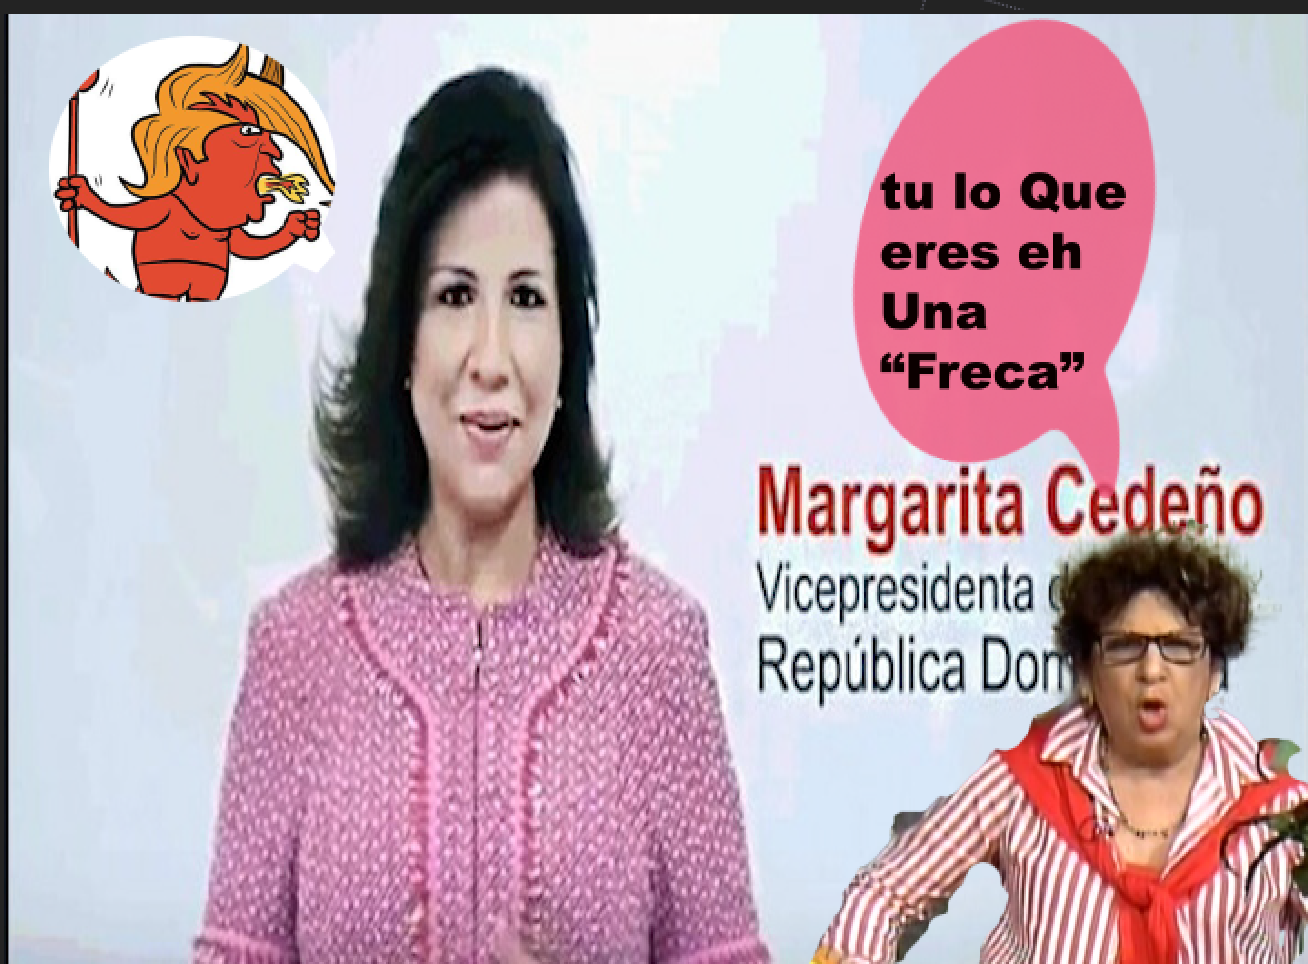 Doña Consuelo Le Dice “Freca” A La Vice-Presidenta Margarita Cedeño, Porque Volvió A Opinar En Contra De Trump